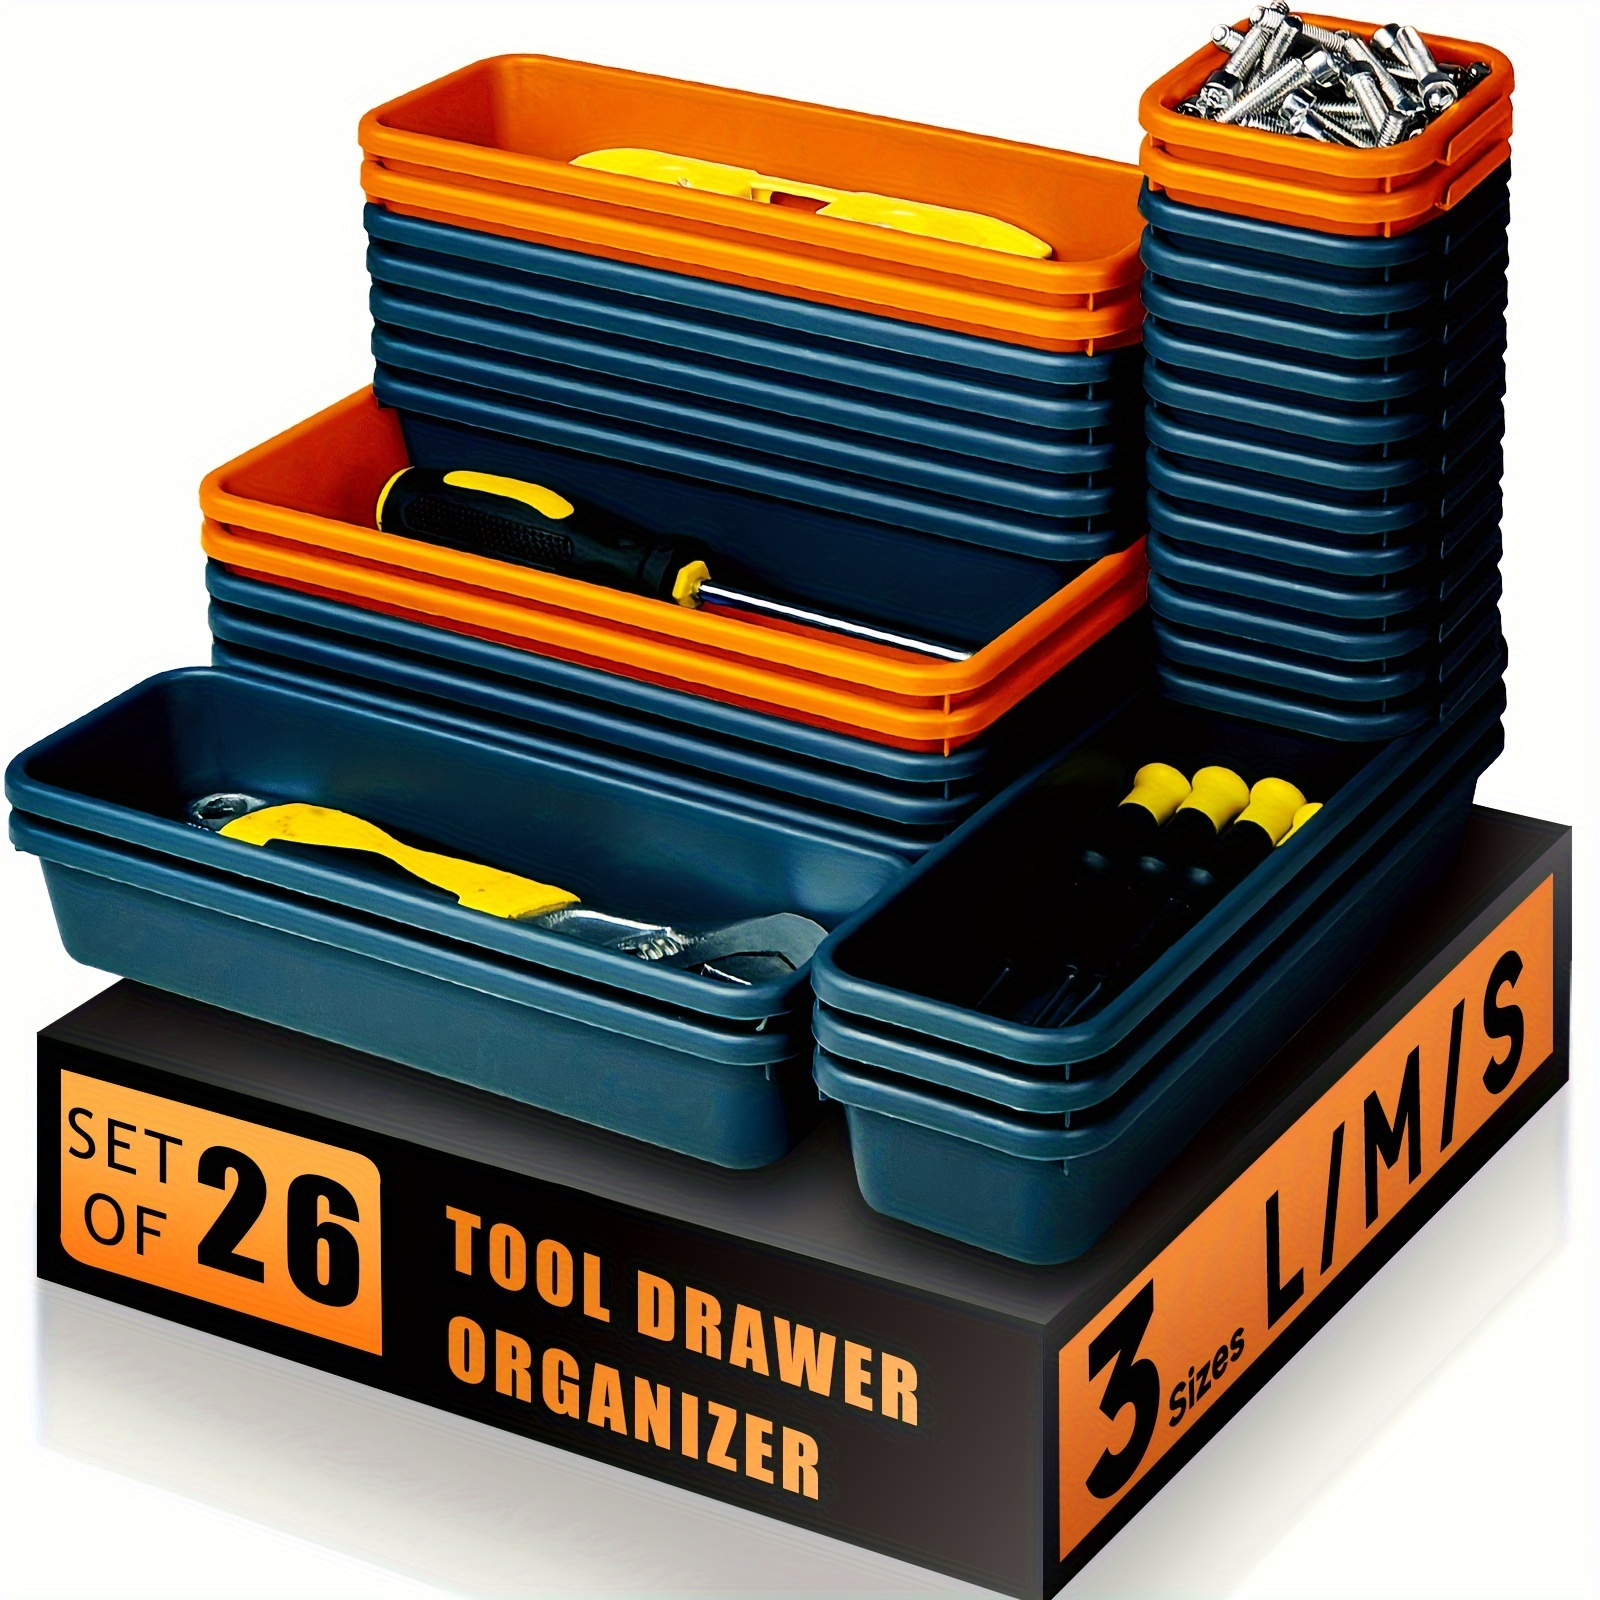 45pcs Tool Box Organizer Tray Divider, Toolbox Desk Drawer Organizer,  Garage Organization Storage For Rolling Tool Chest, Cart Cabinet Workbench  Works